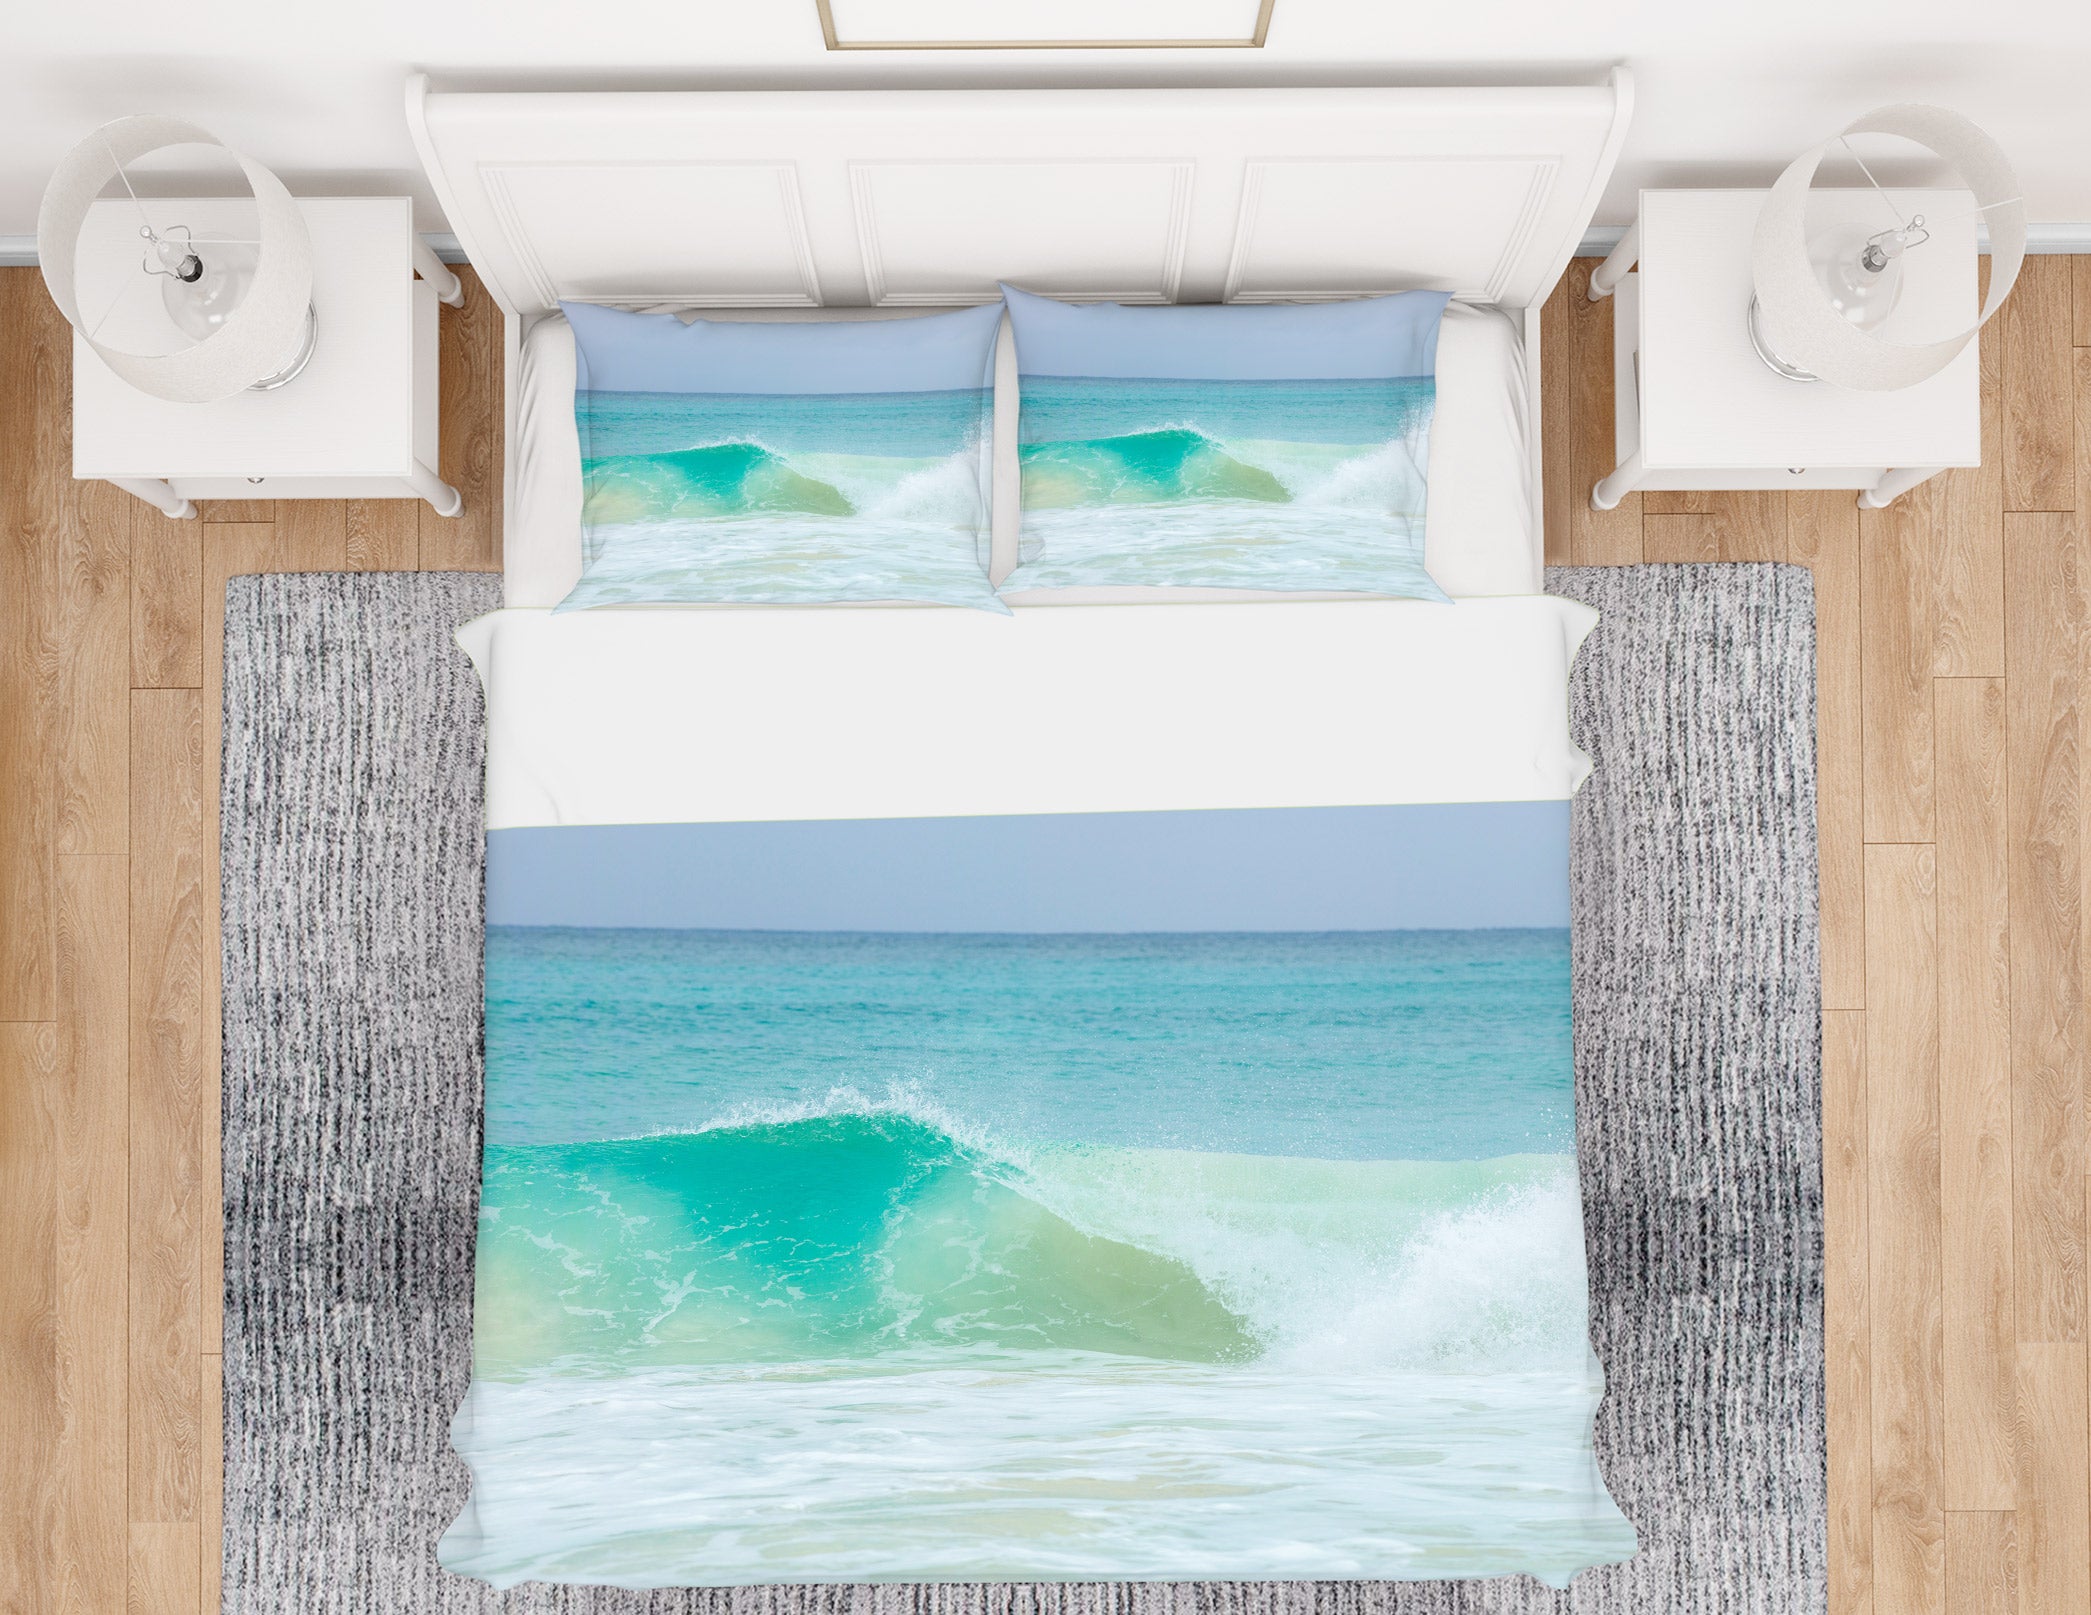 3D Ocean Spray 6932 Assaf Frank Bedding Bed Pillowcases Quilt Cover Duvet Cover